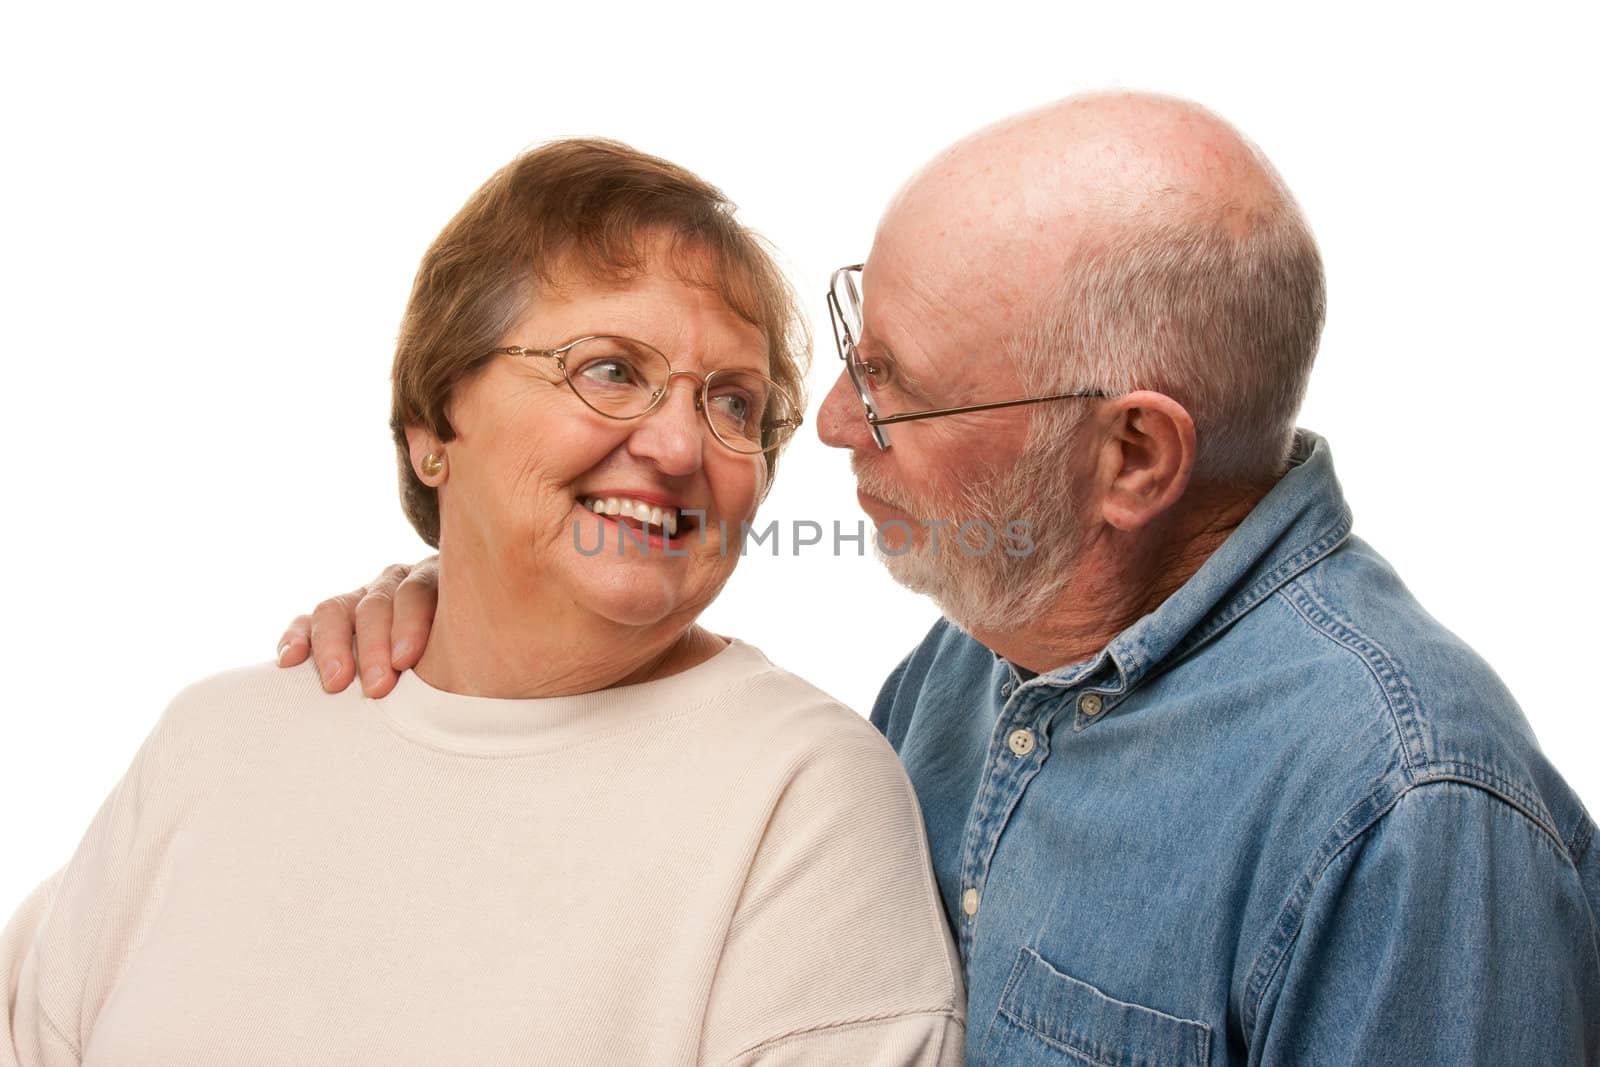 Affectionate Senior Couple Portrait by Feverpitched